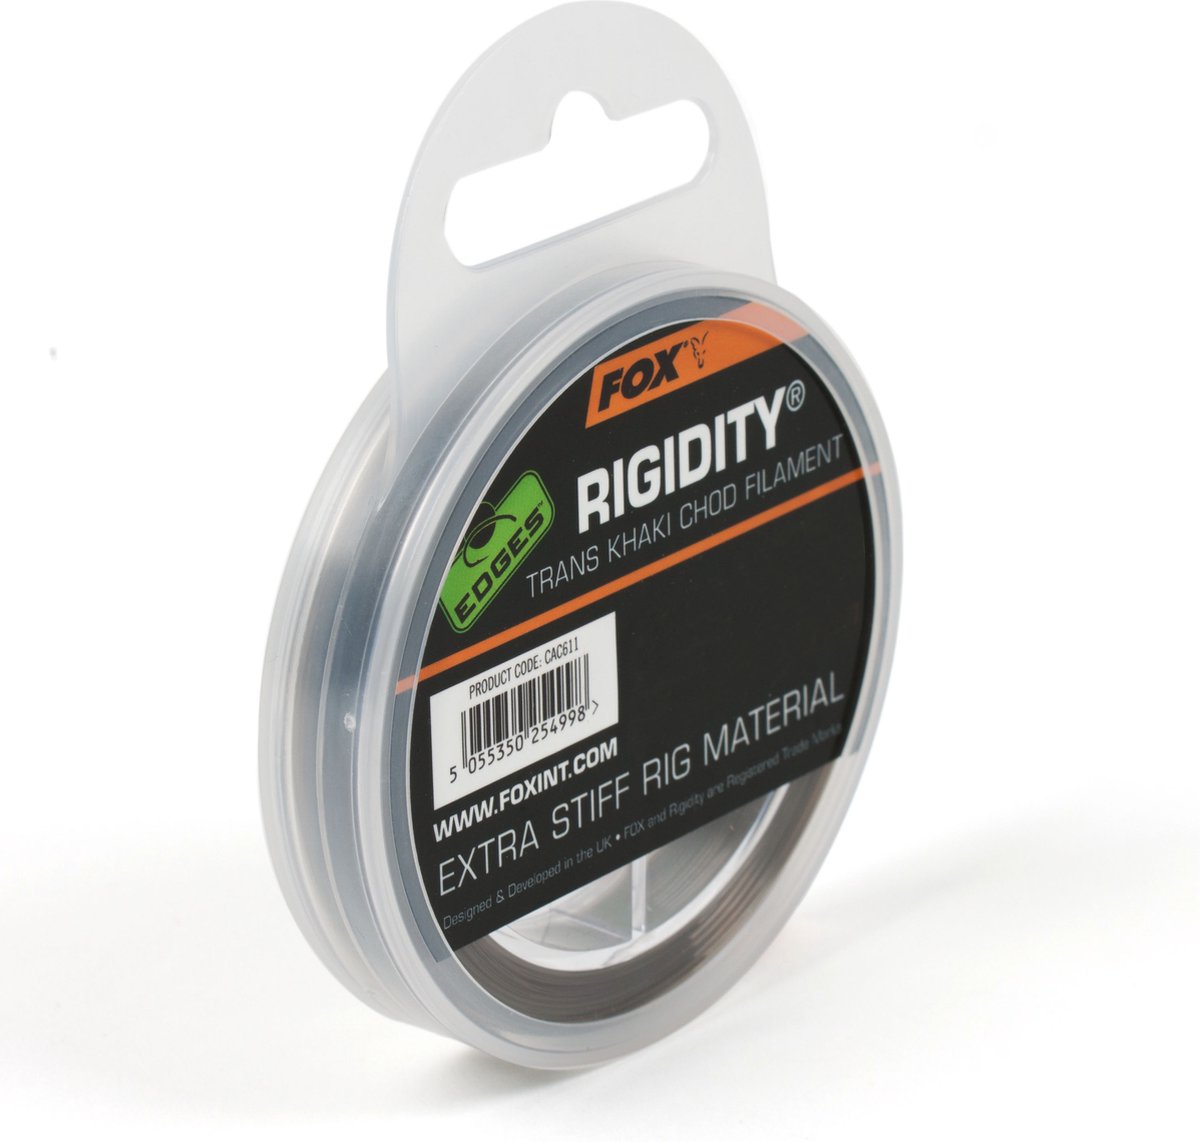 Fox Rigidity Chod Filament - Trans Khaki - 25lb - 30m - Khaki - Fox